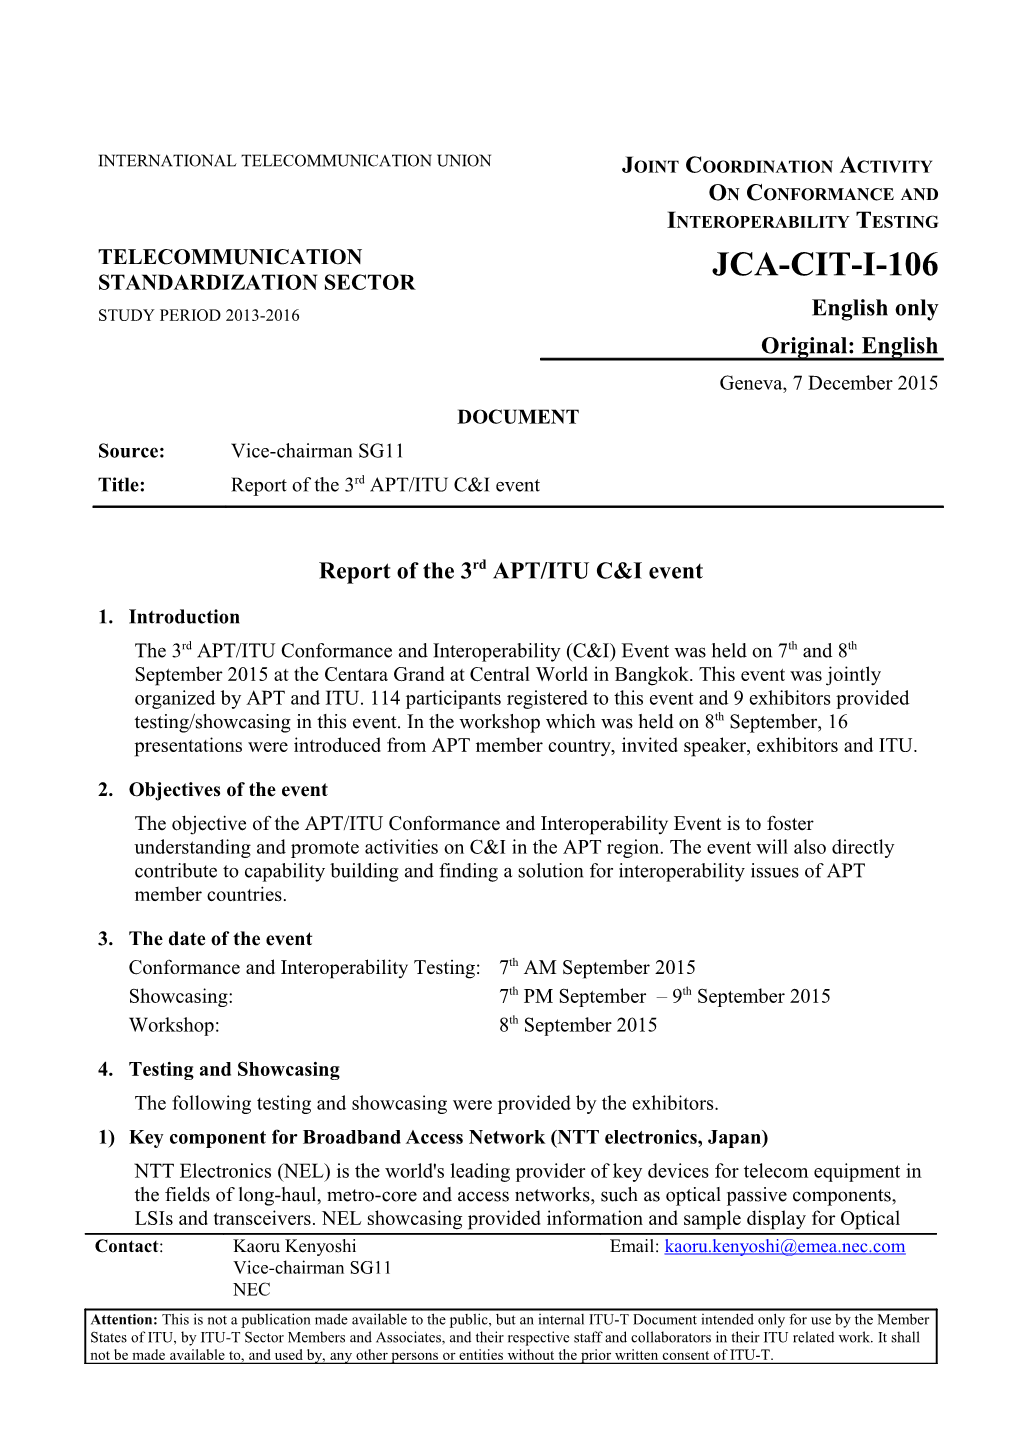 Report of the 3Rd APT/ITU C&I Event